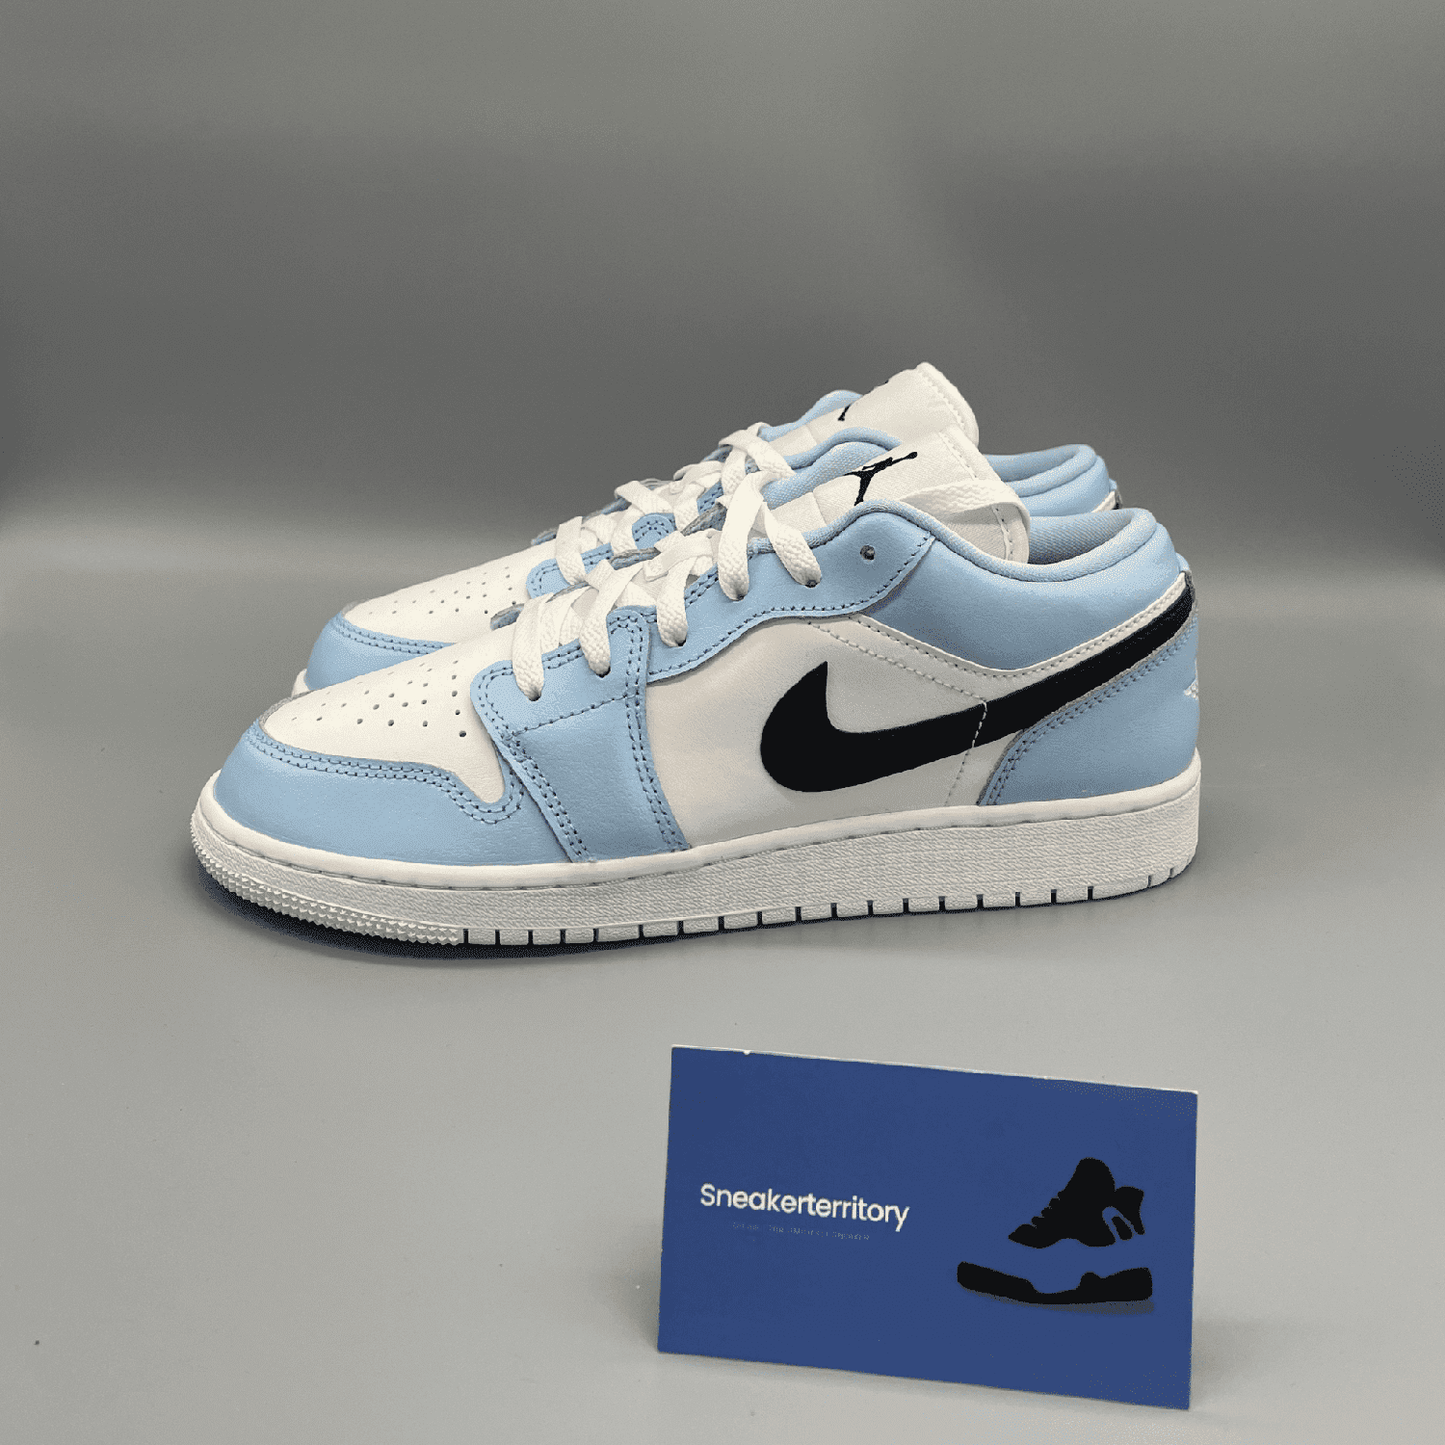 Air Jordan 1 Low Ice Blue Black (GS) - Sneakerterritory; Sneaker Territory 4